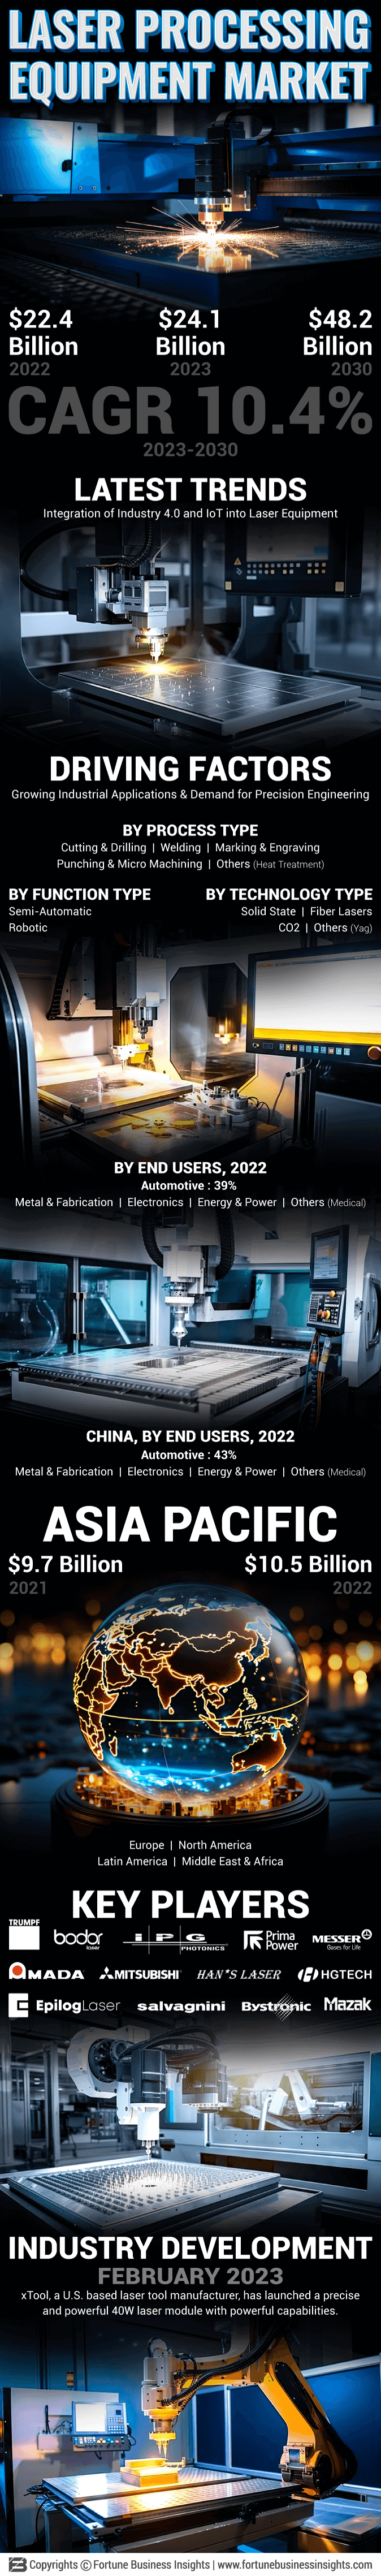 Laser Processing Equipment Market